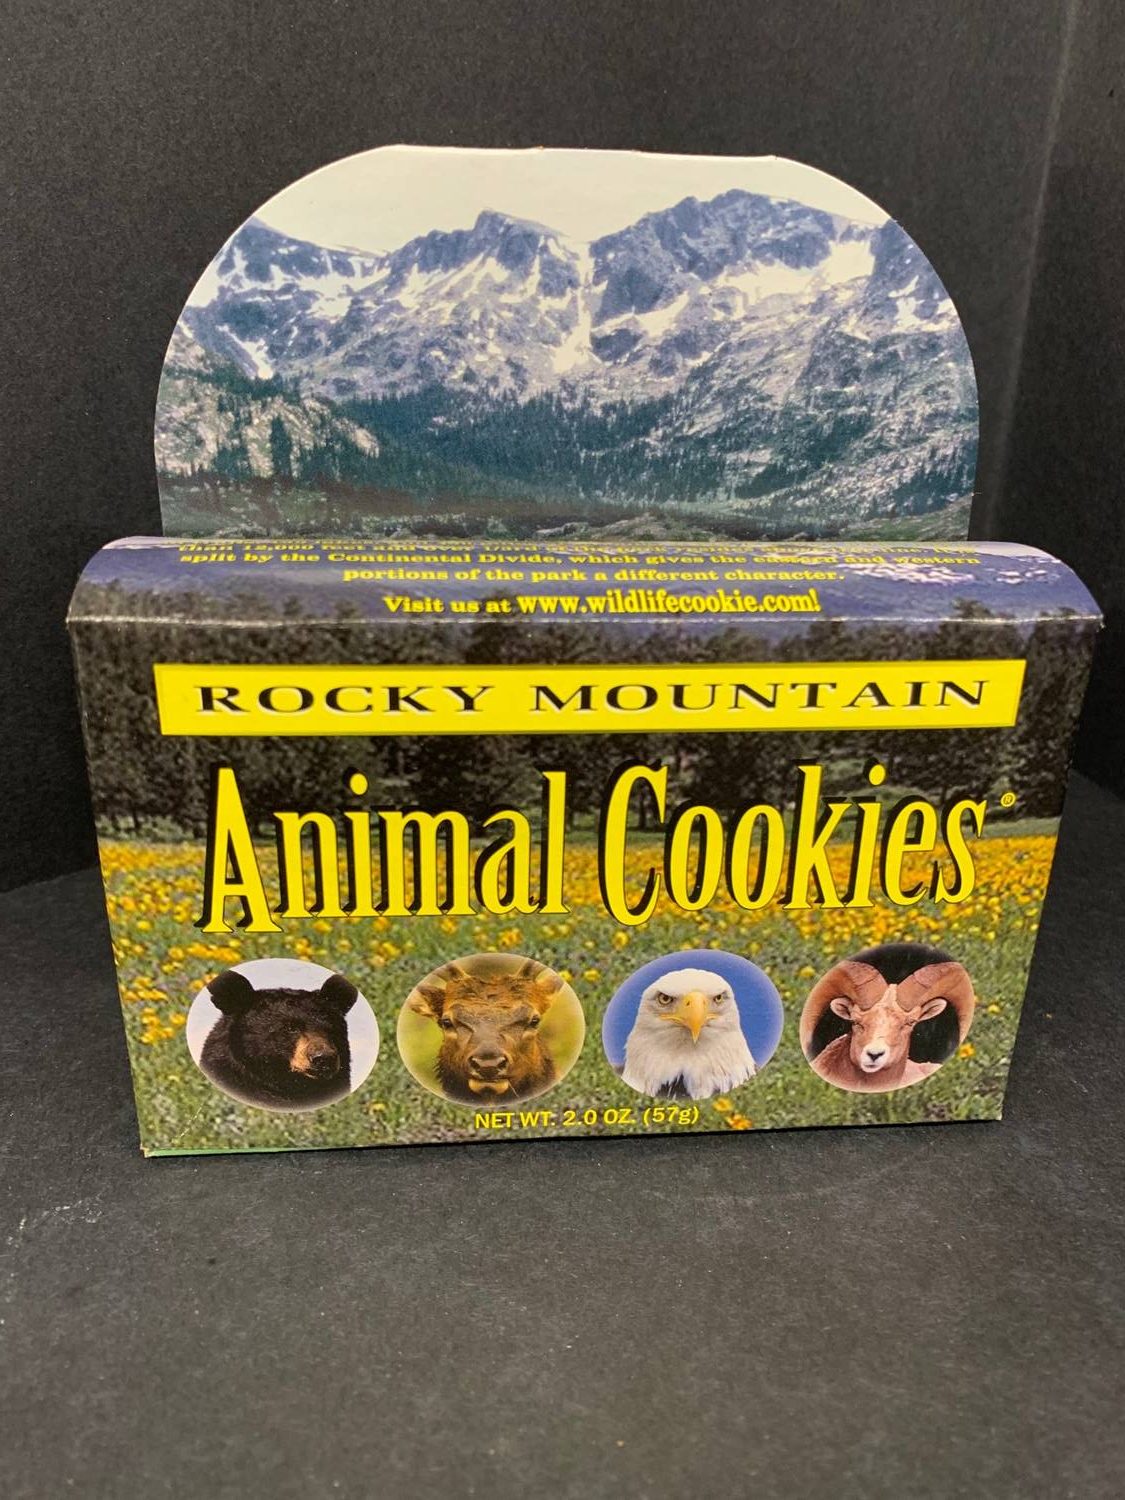 Animal cookies